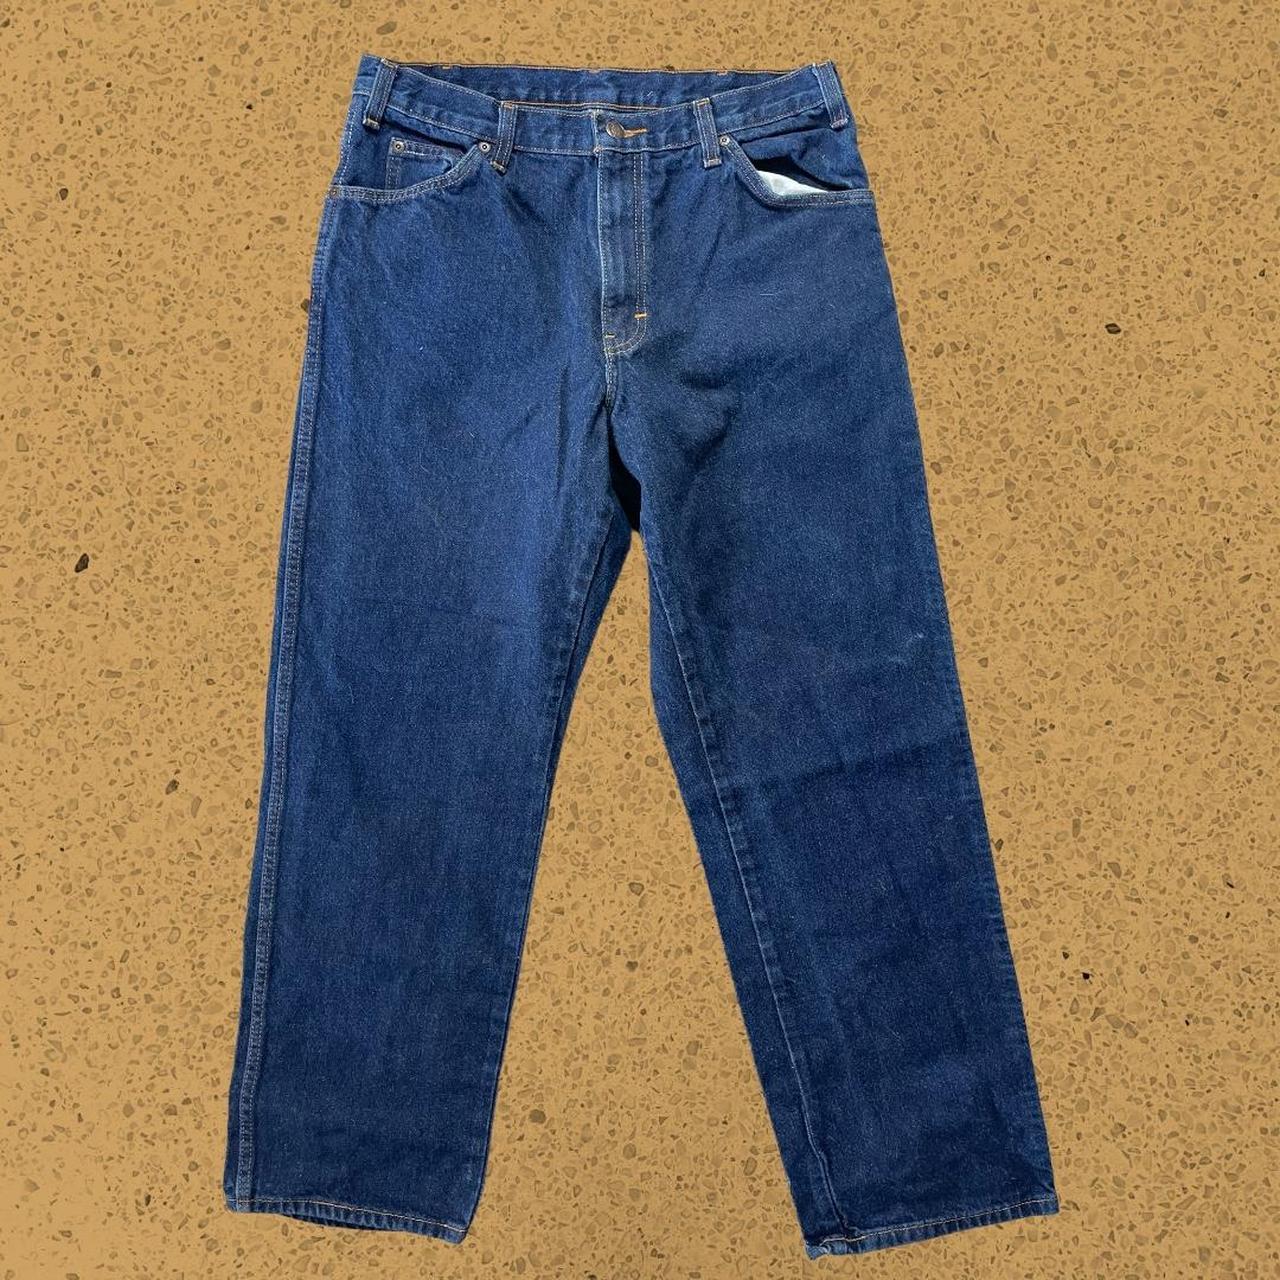 Product Image 2 - Dickies work pants denim jeans
Mens